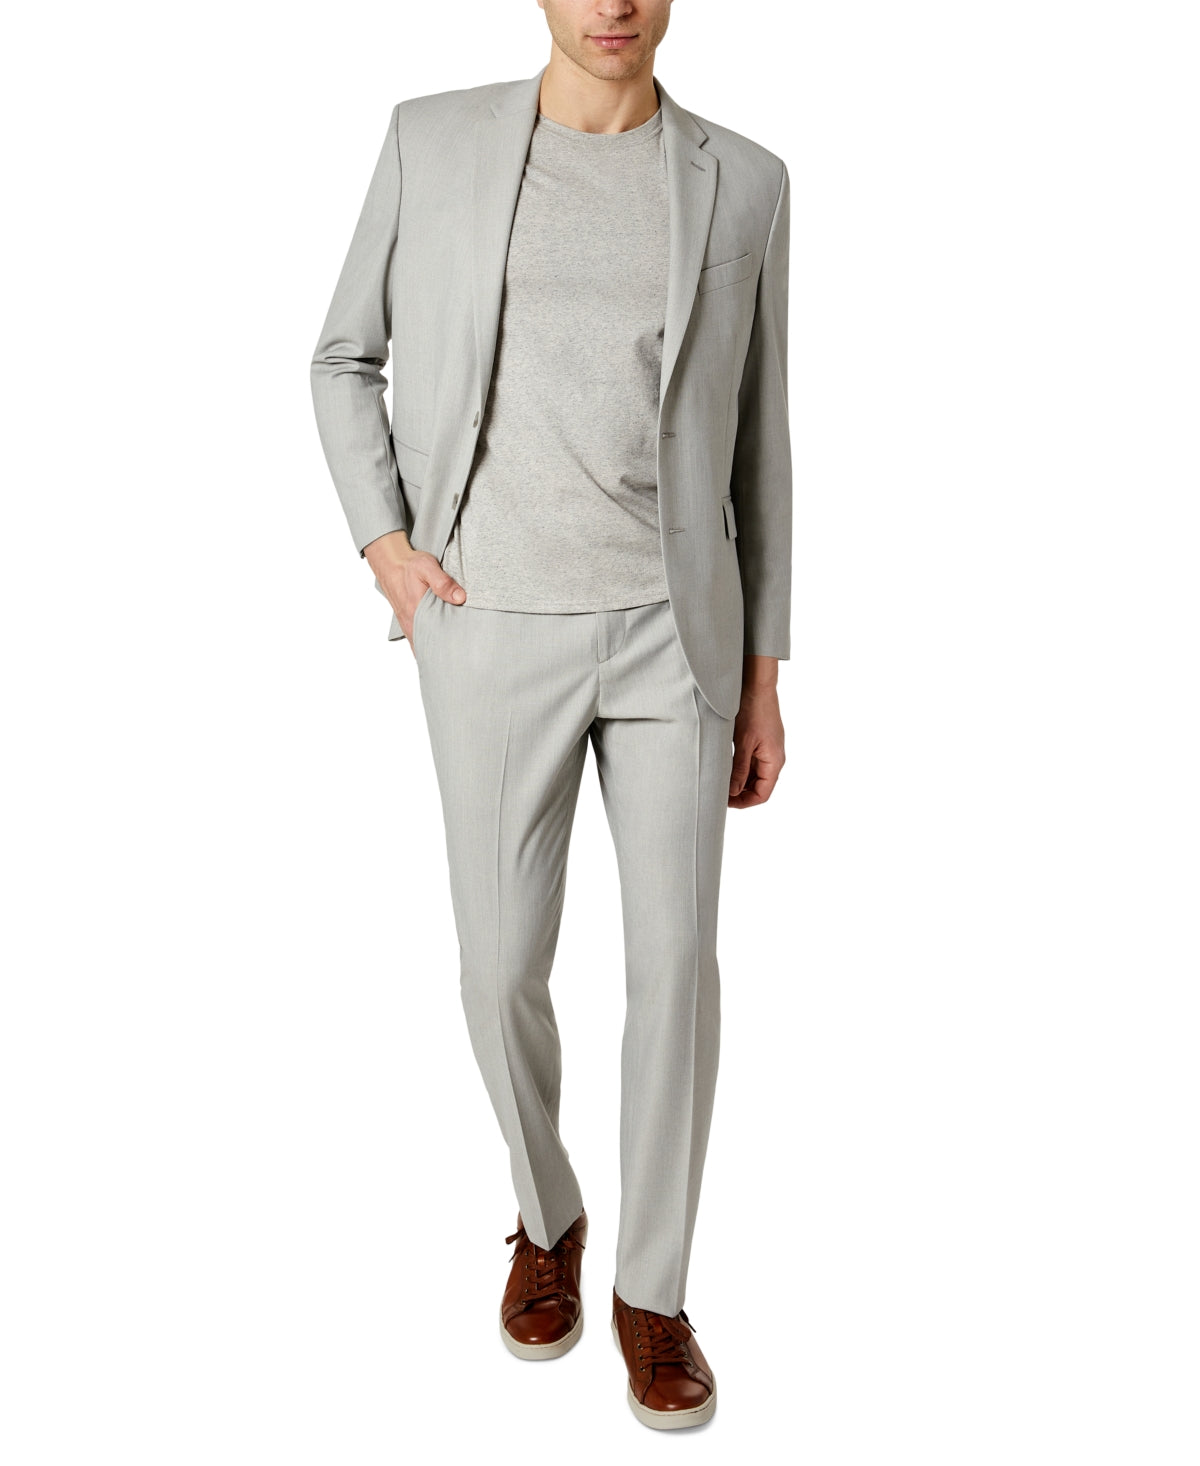 Kenneth Cole Mens Suit 40R / 33 x 30 Flex Slim-Fit Stretch Light Grey Solid